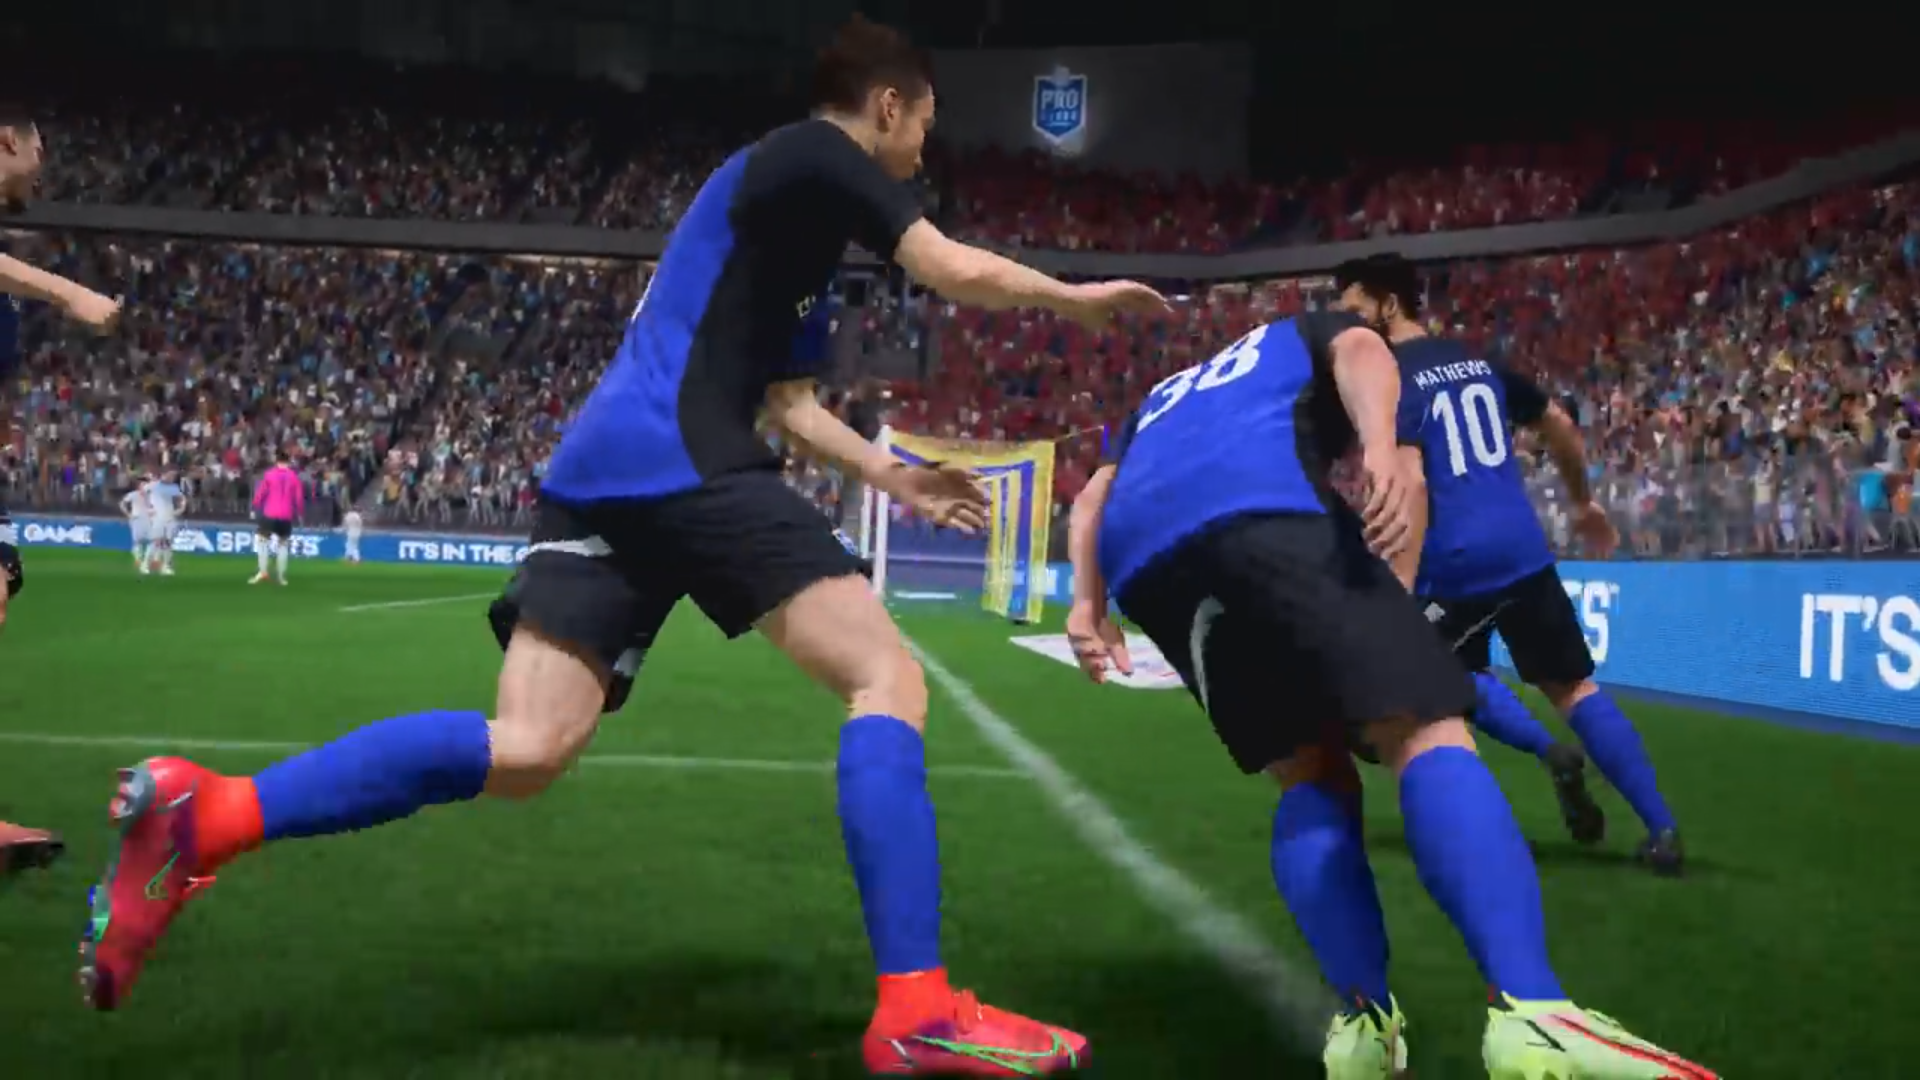 FIFA 23 junta VOLTA e Pro Clubs para atualizar modos multiplayer